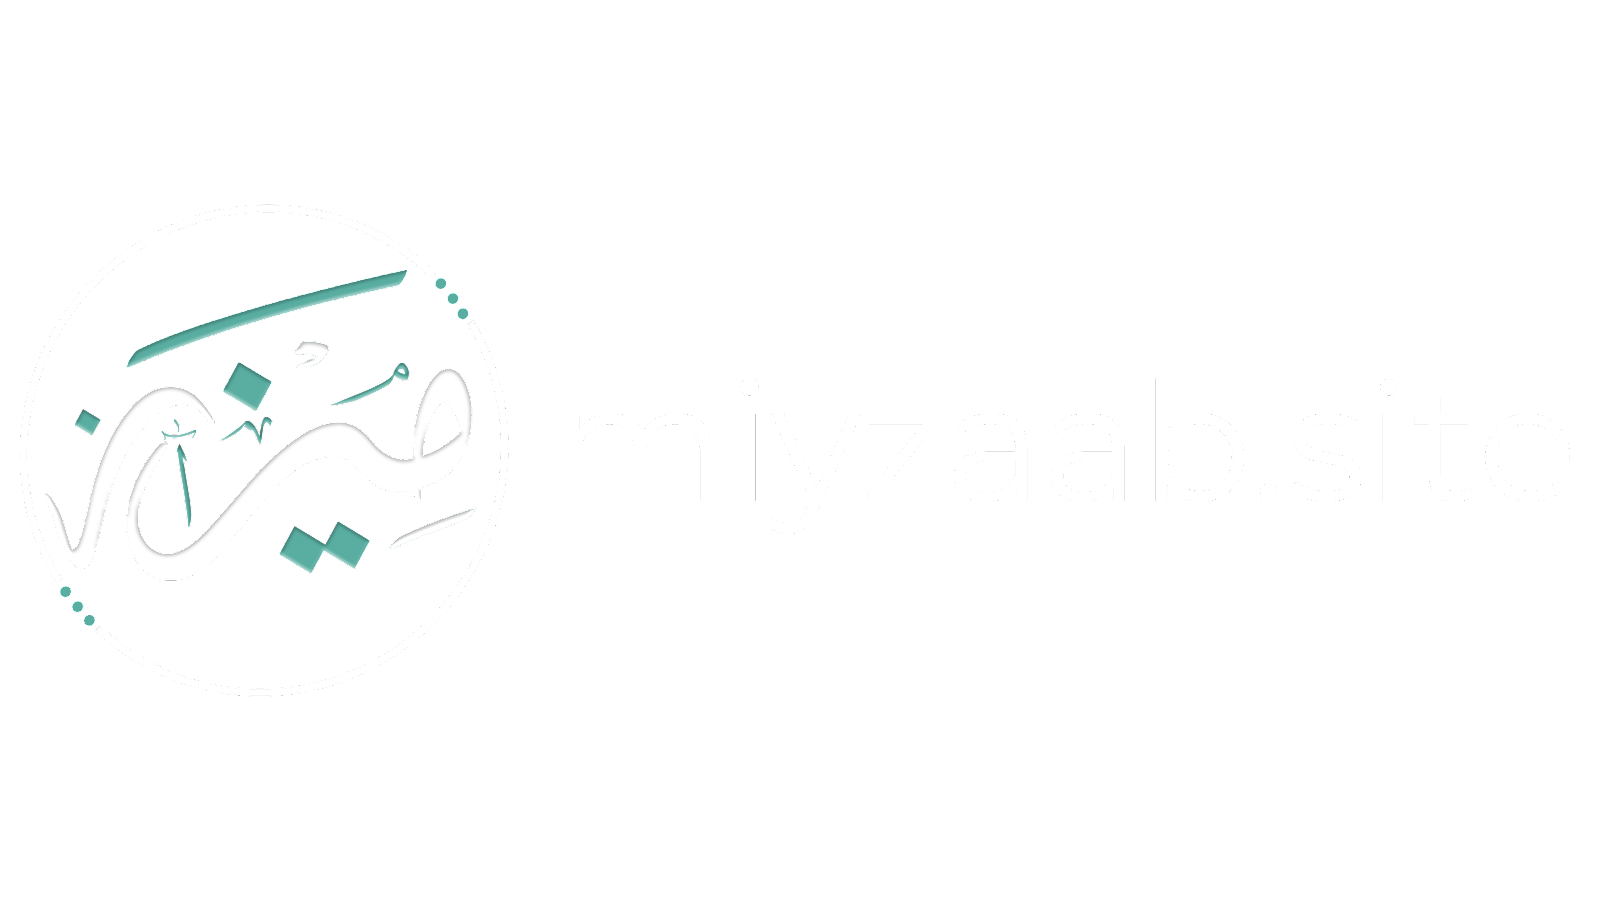 Miyzaab